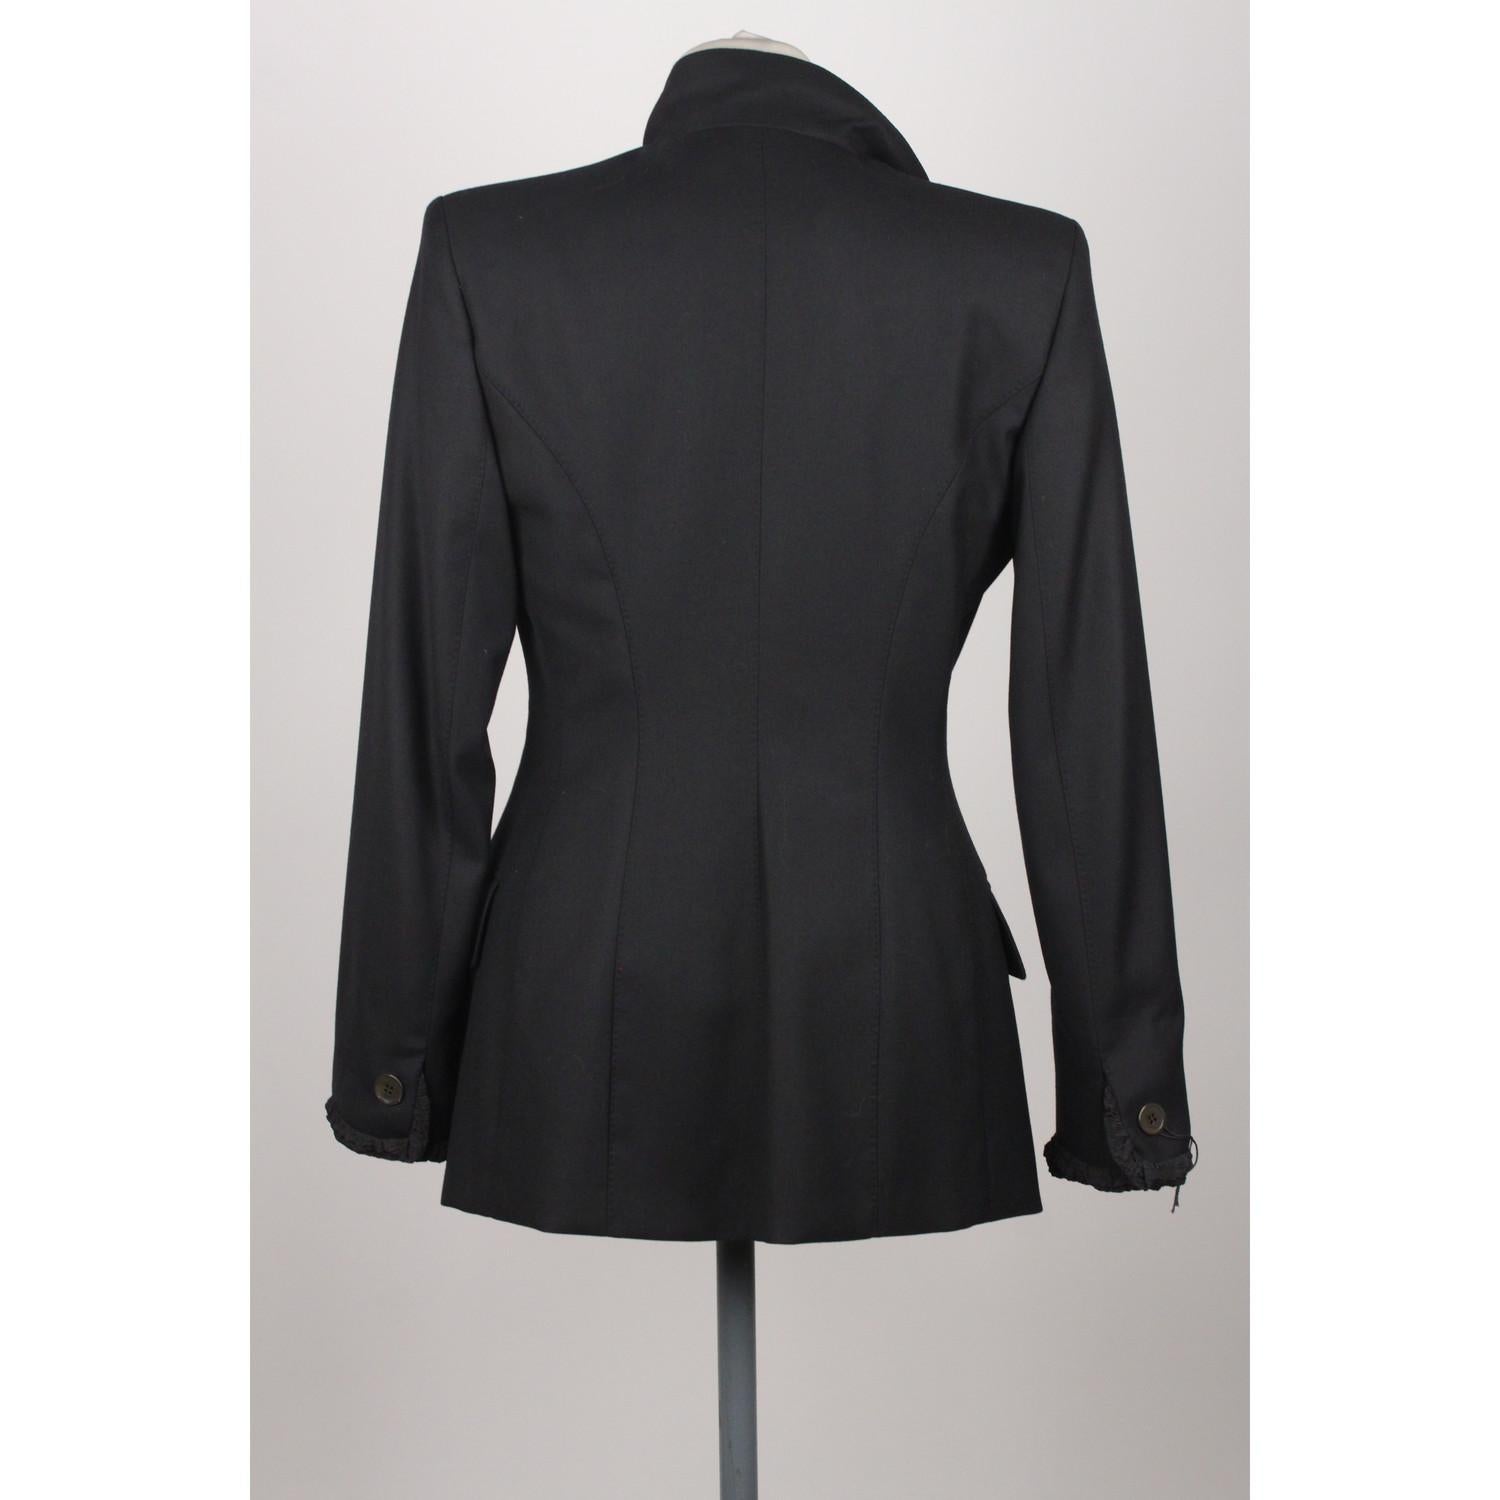 Yves Saint Laurent Black Wool Pant Suit with Ruffles Size 36 5